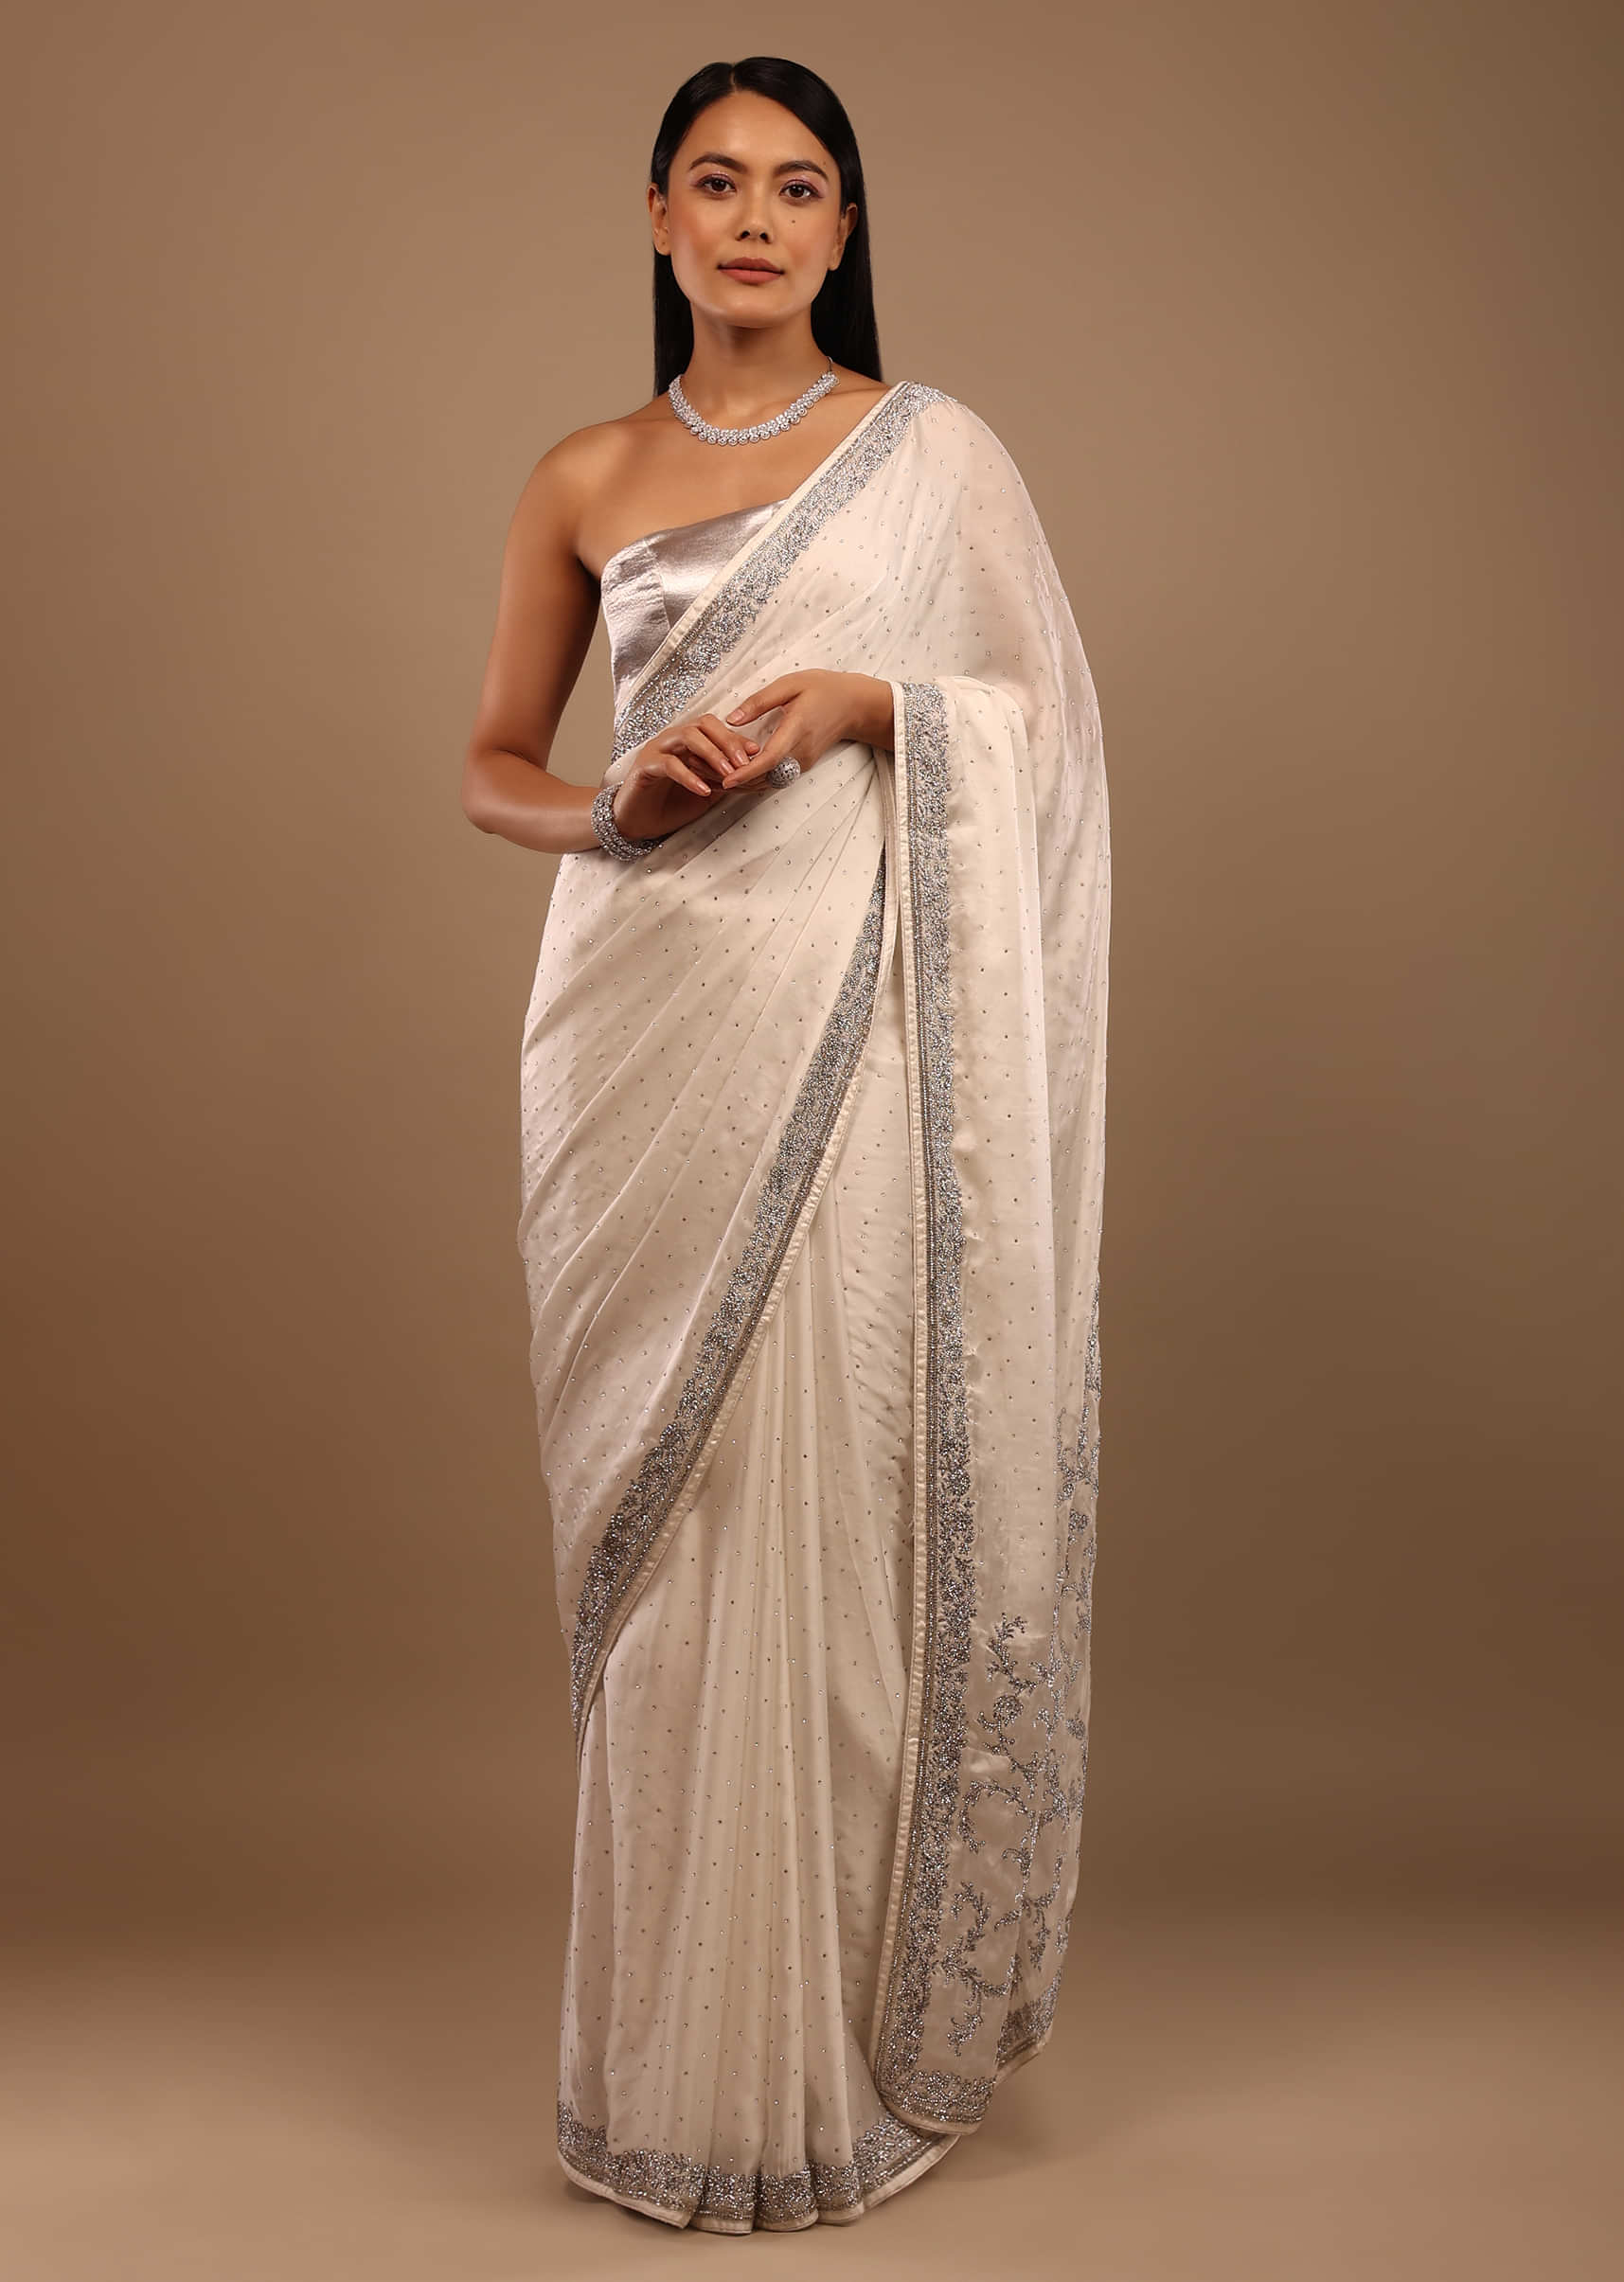 Details more than 85 satin white saree super hot